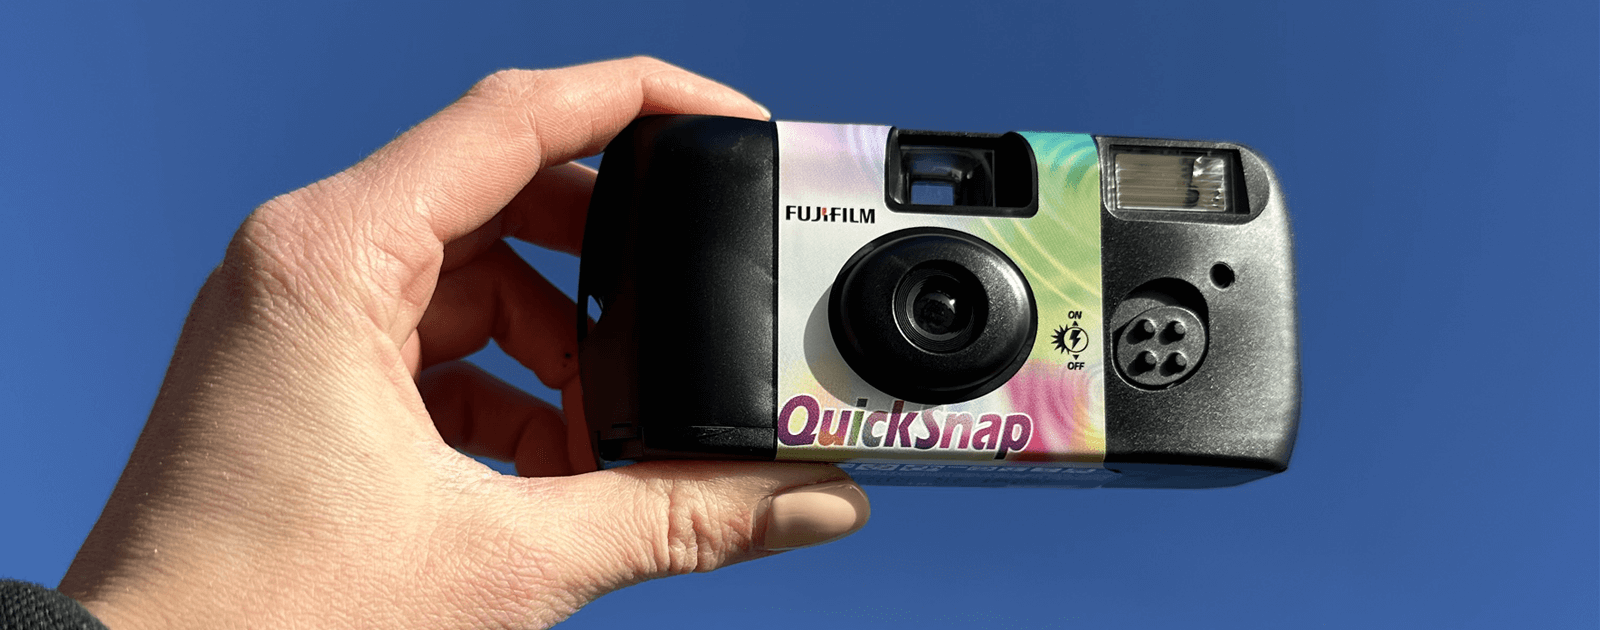 De magie van wegwerpcamera’s: ontdek de FUJIFILM QuickSnap wegwerpcamera